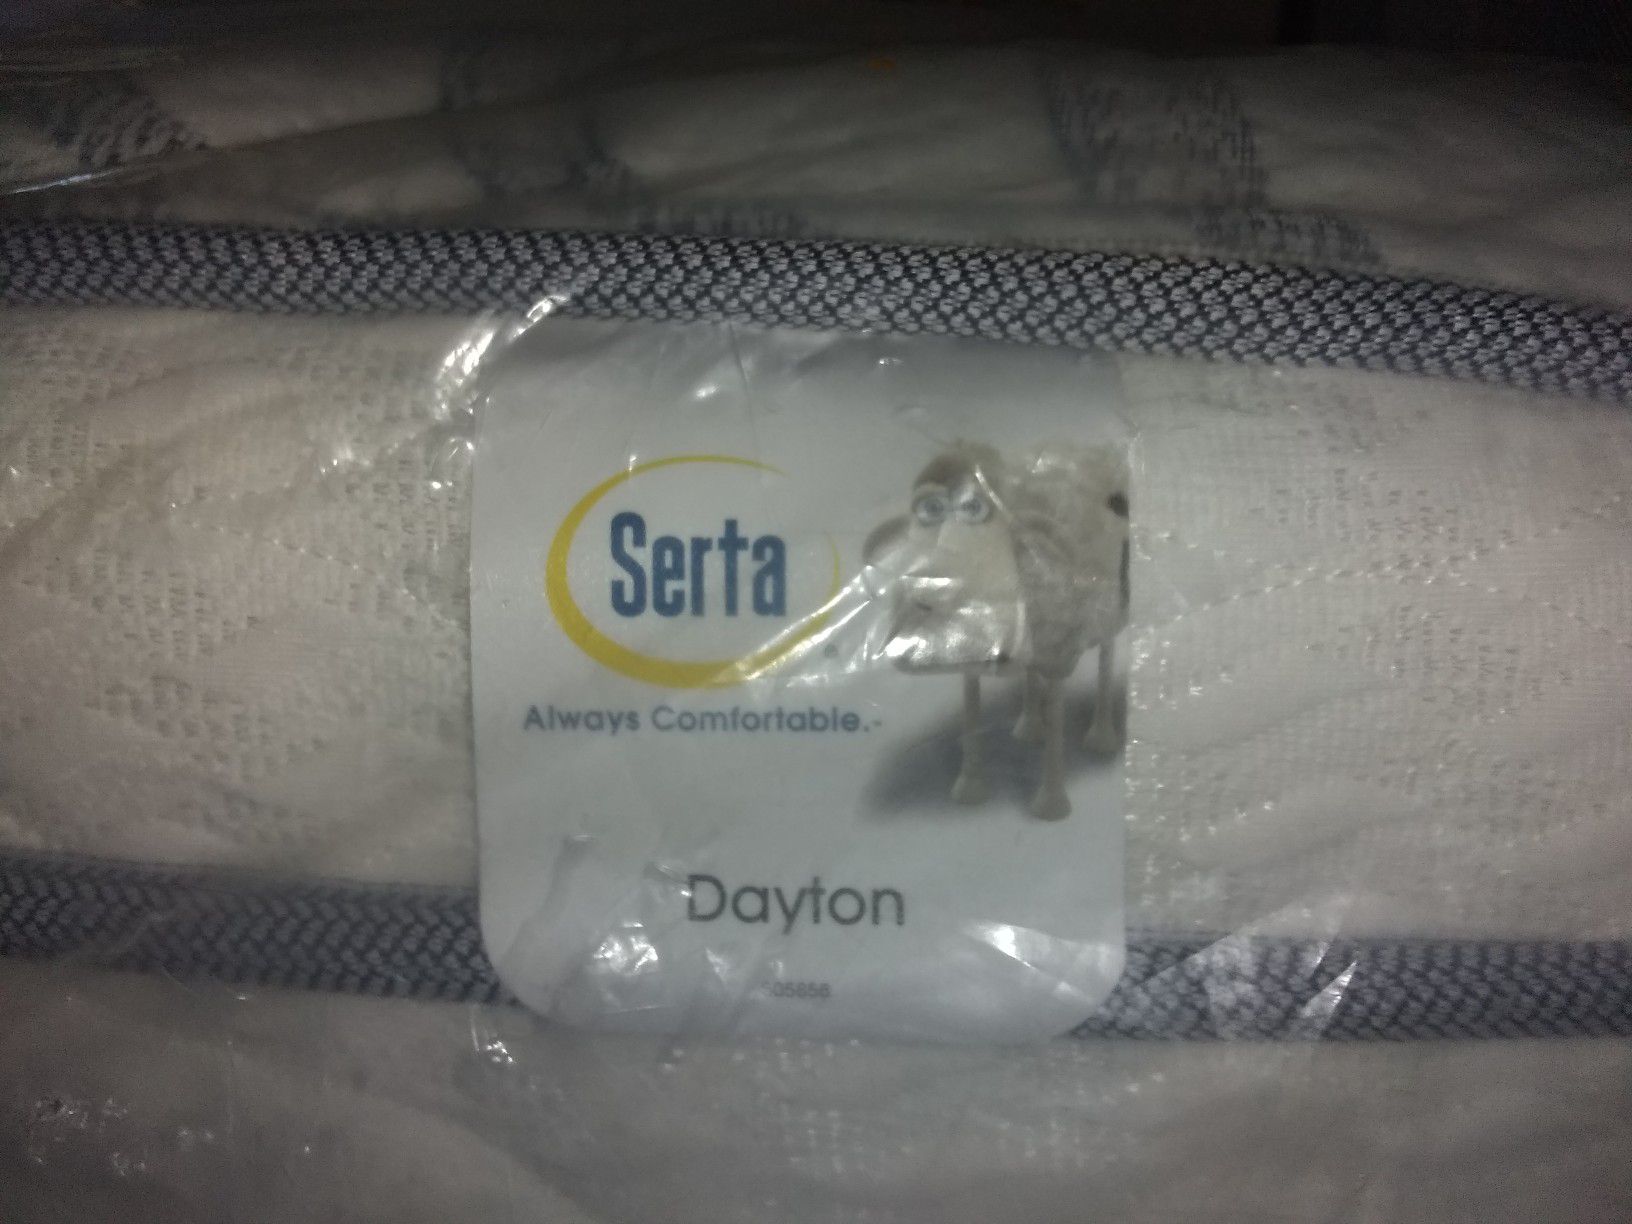 New Queen size Serta mattress and box